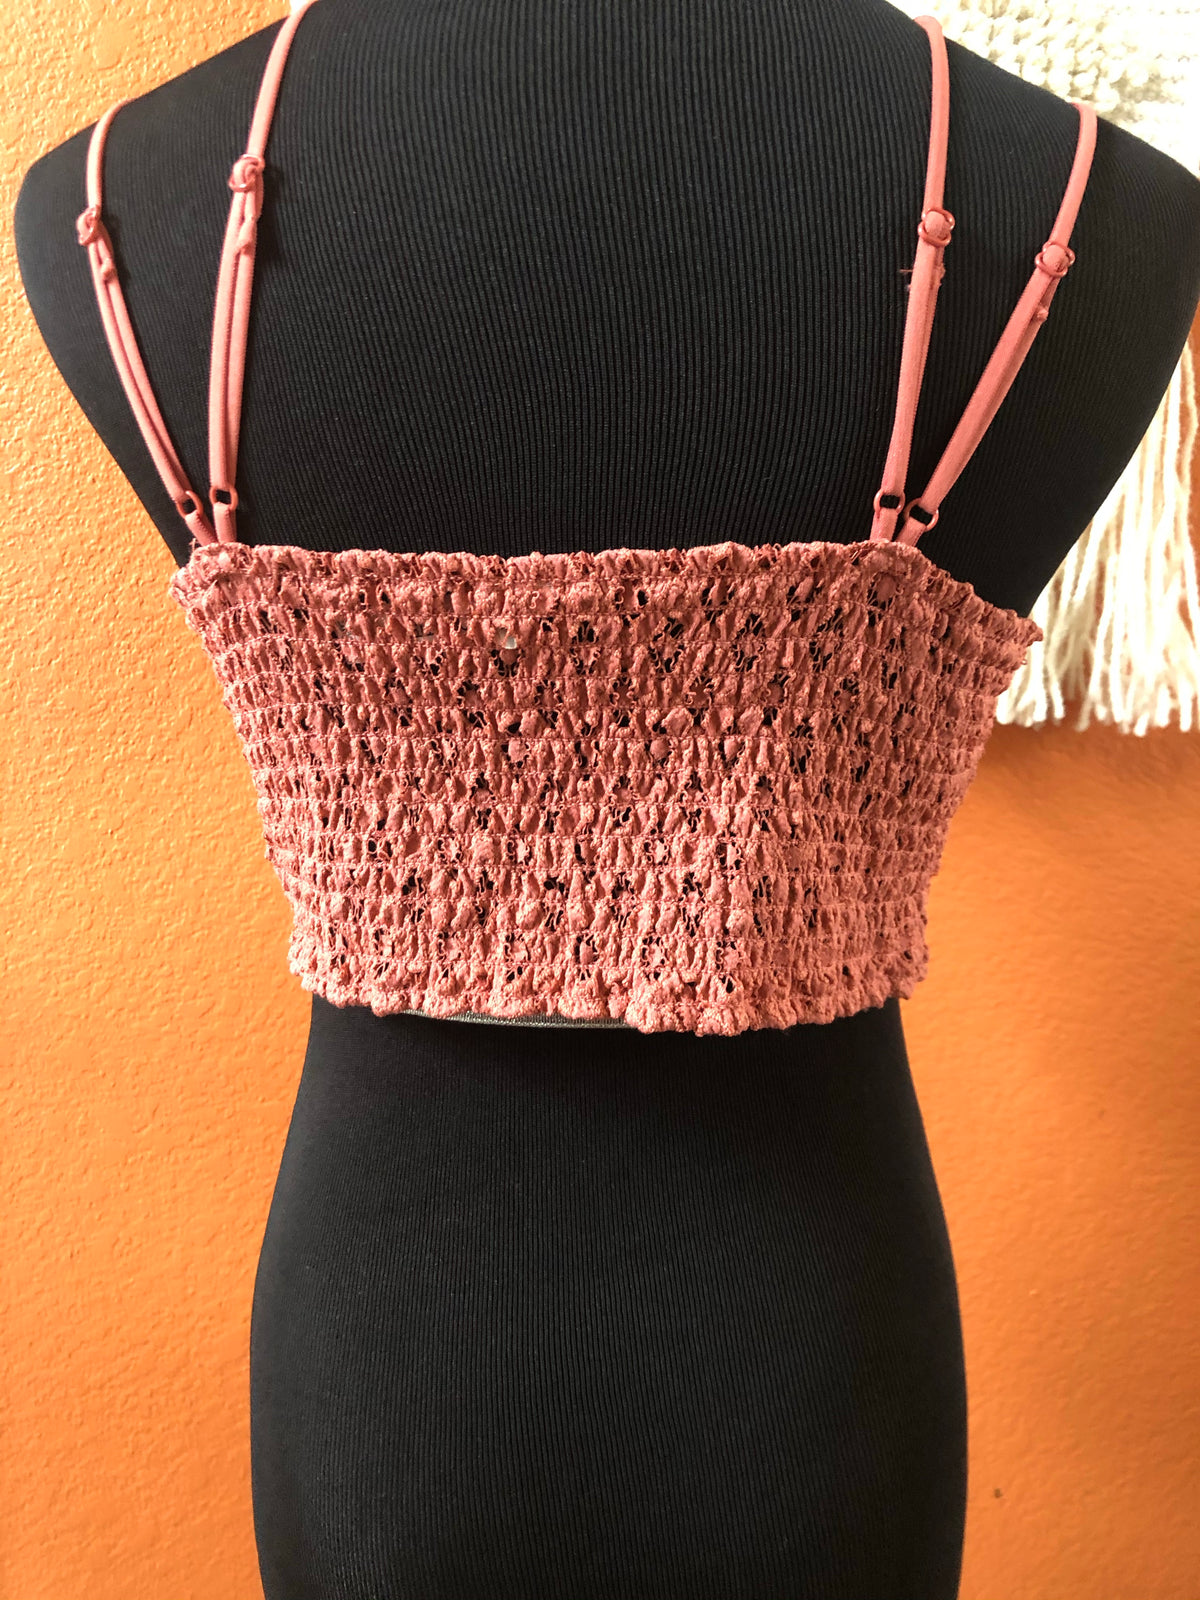 Crochet Bralette with Padding